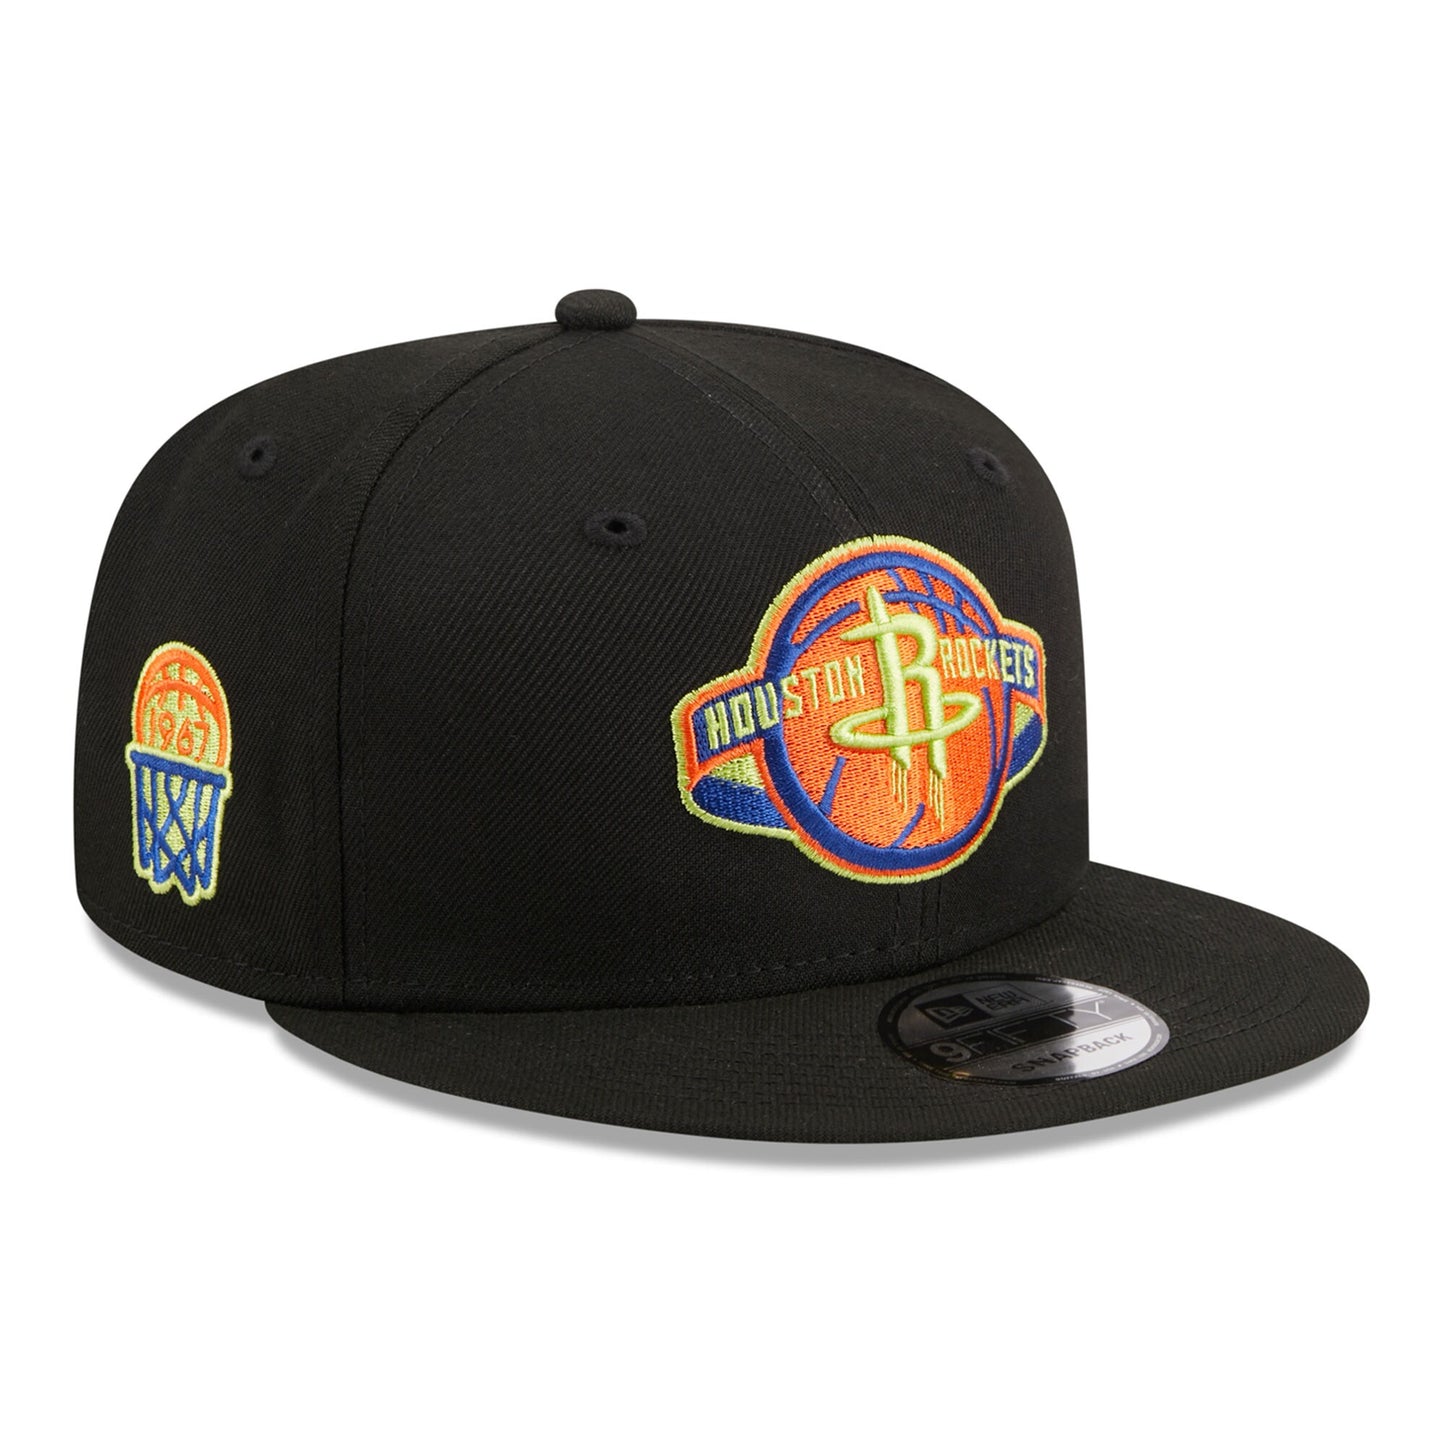 Houston Rockets New Era Neon Pop 9FIFTY Snapback Hat - Black